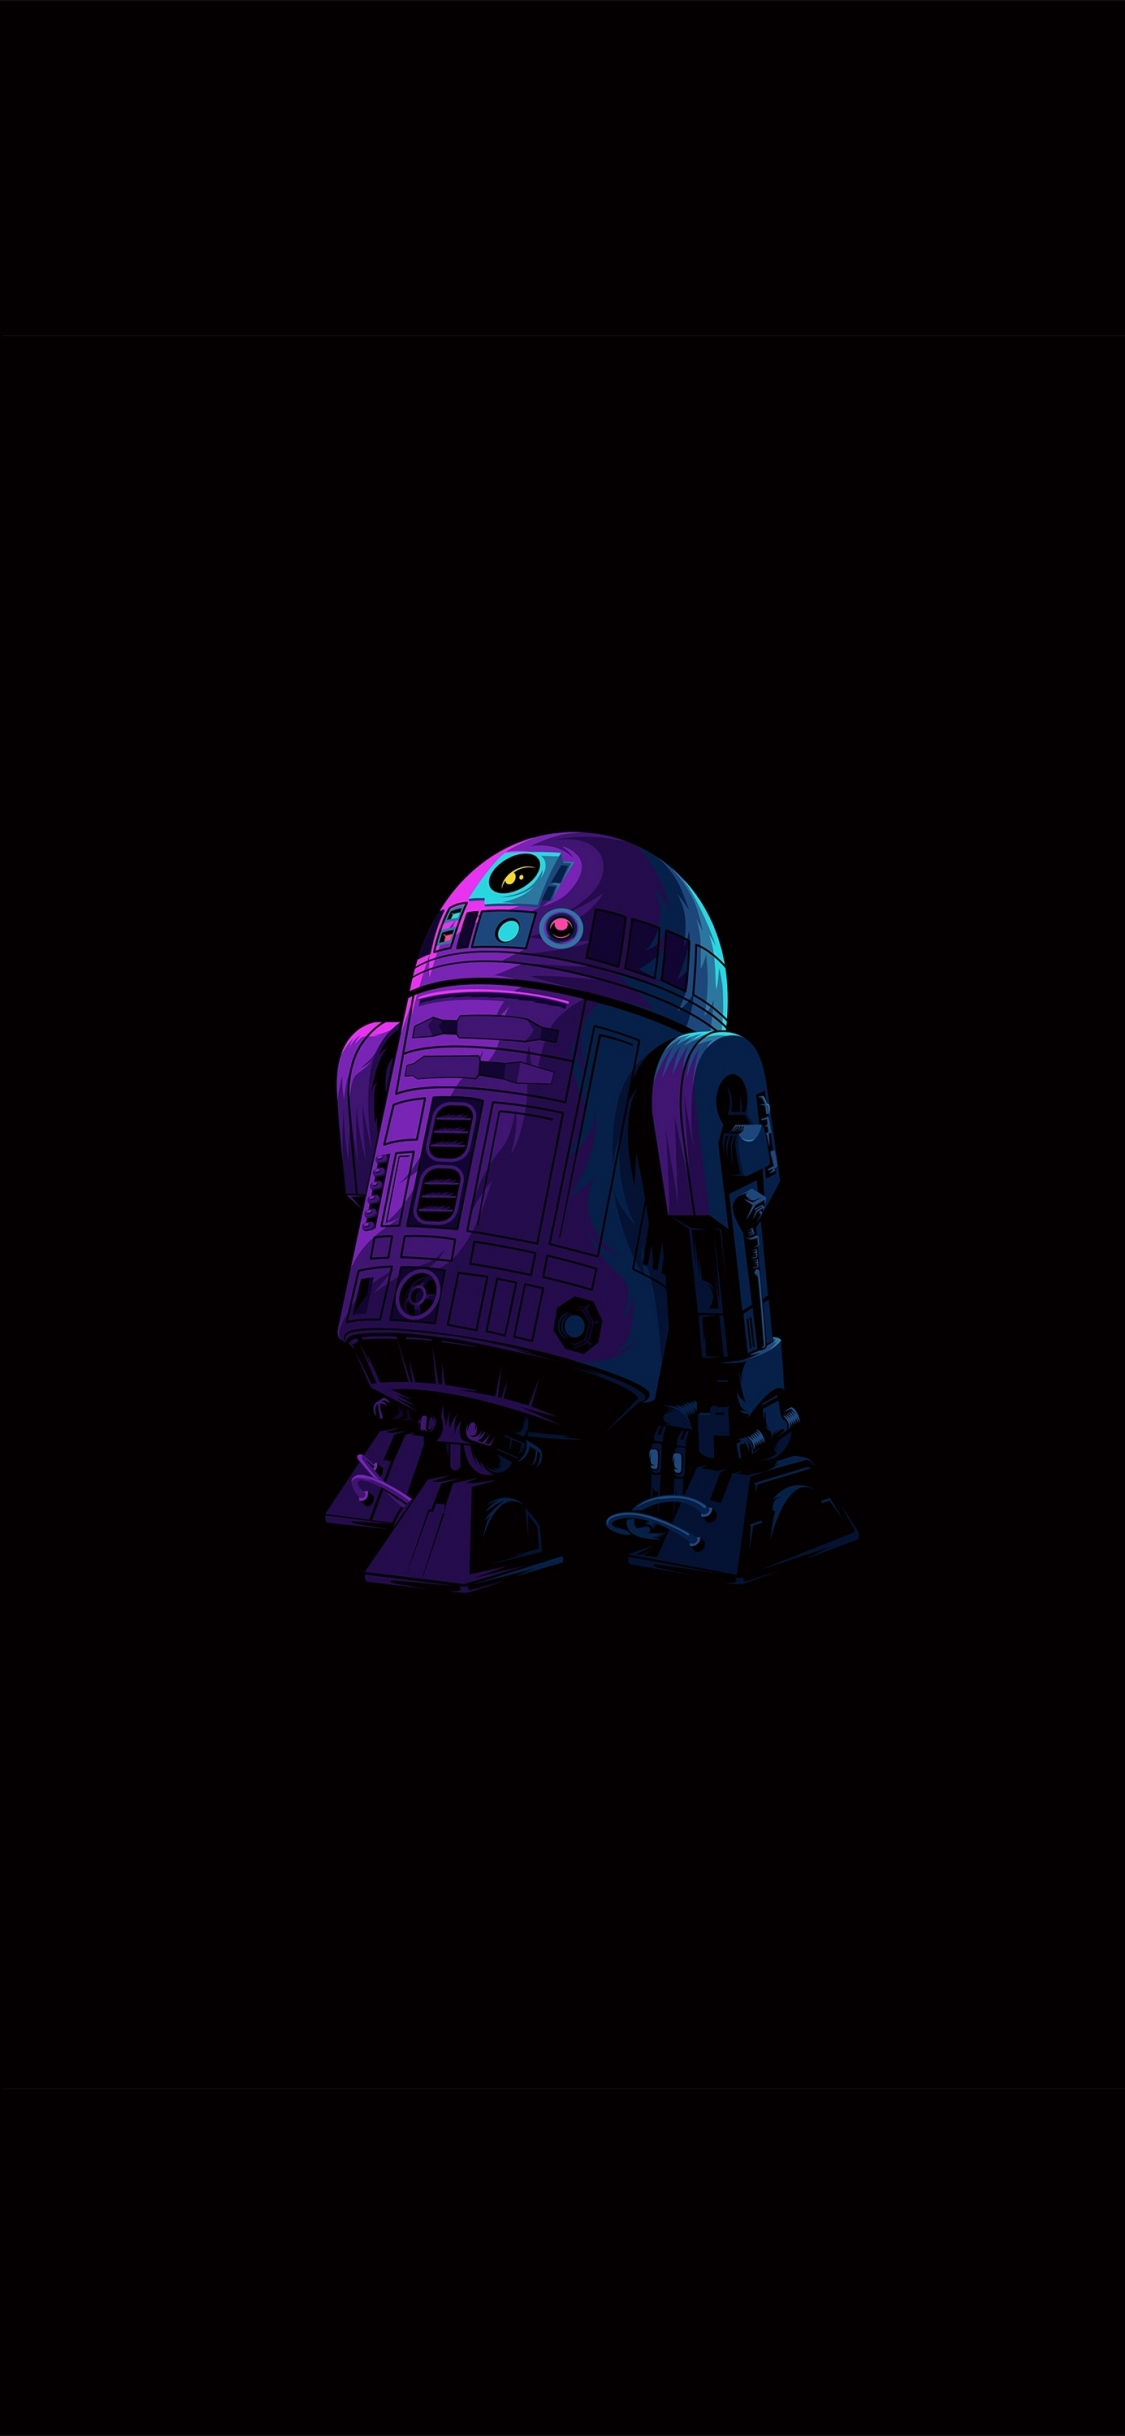 Download Robot Minimal Star Wars 1125x2436 Wallpaper Iphone X 1125x2436 Hd Image Background